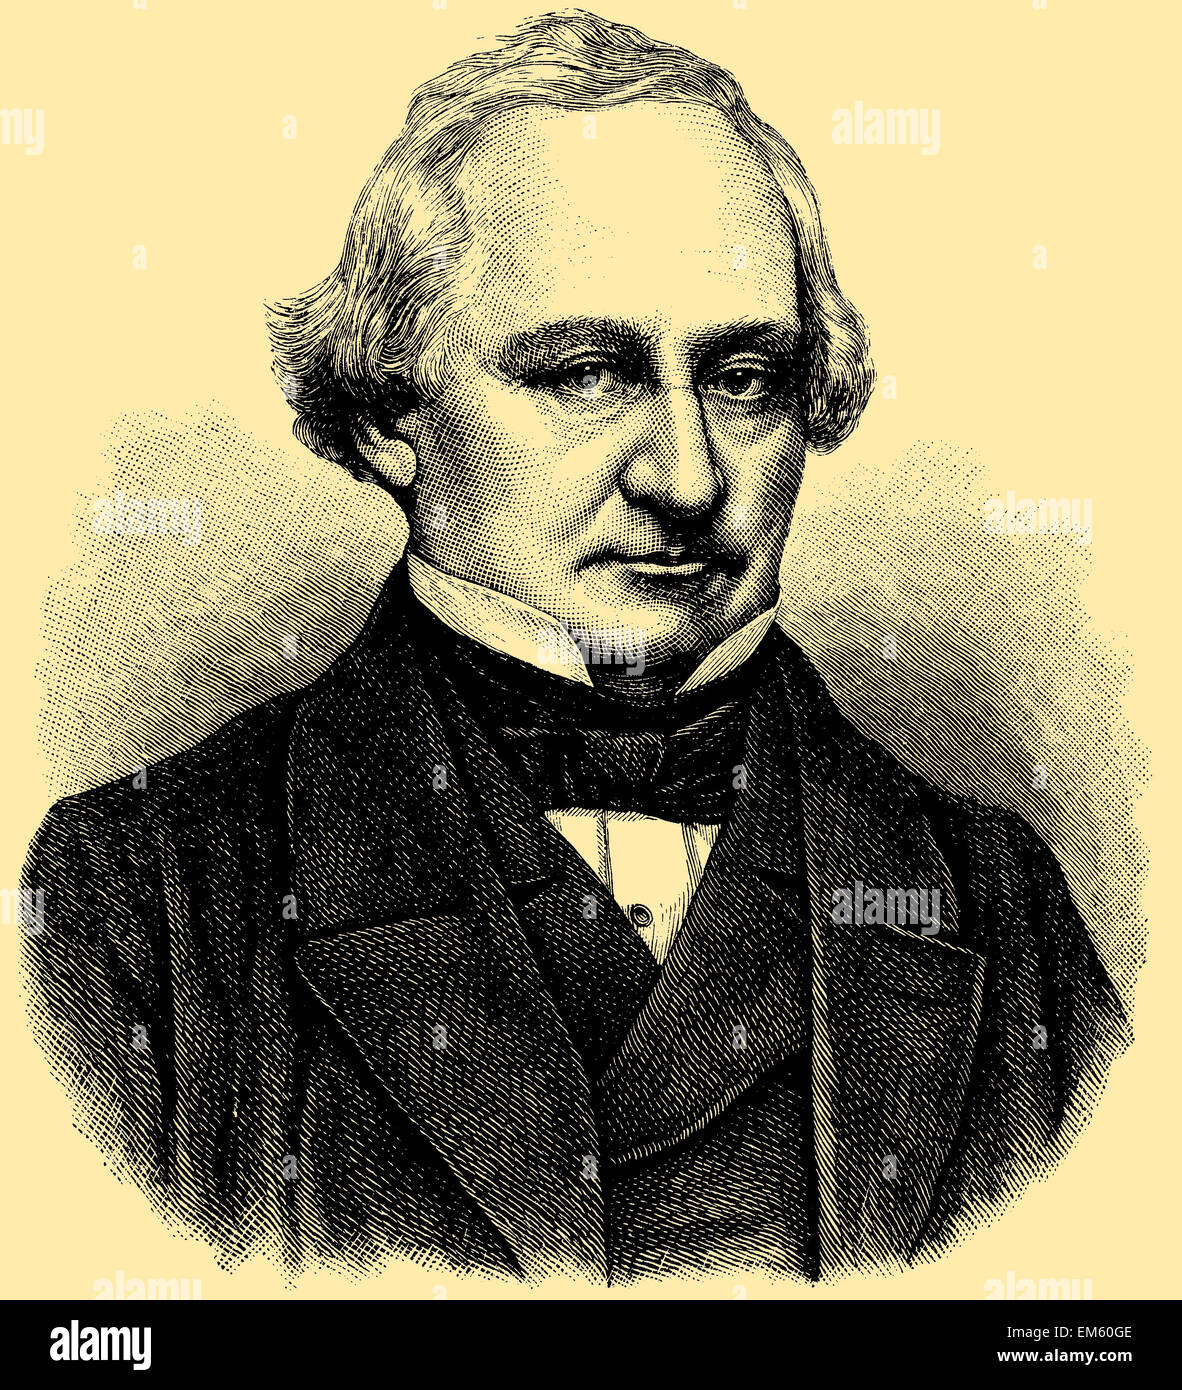 Christian Charles Josias, Baron von Bunsen (25 August 1791 - 28 November 1860), German diplomat and scholar. Stock Photo